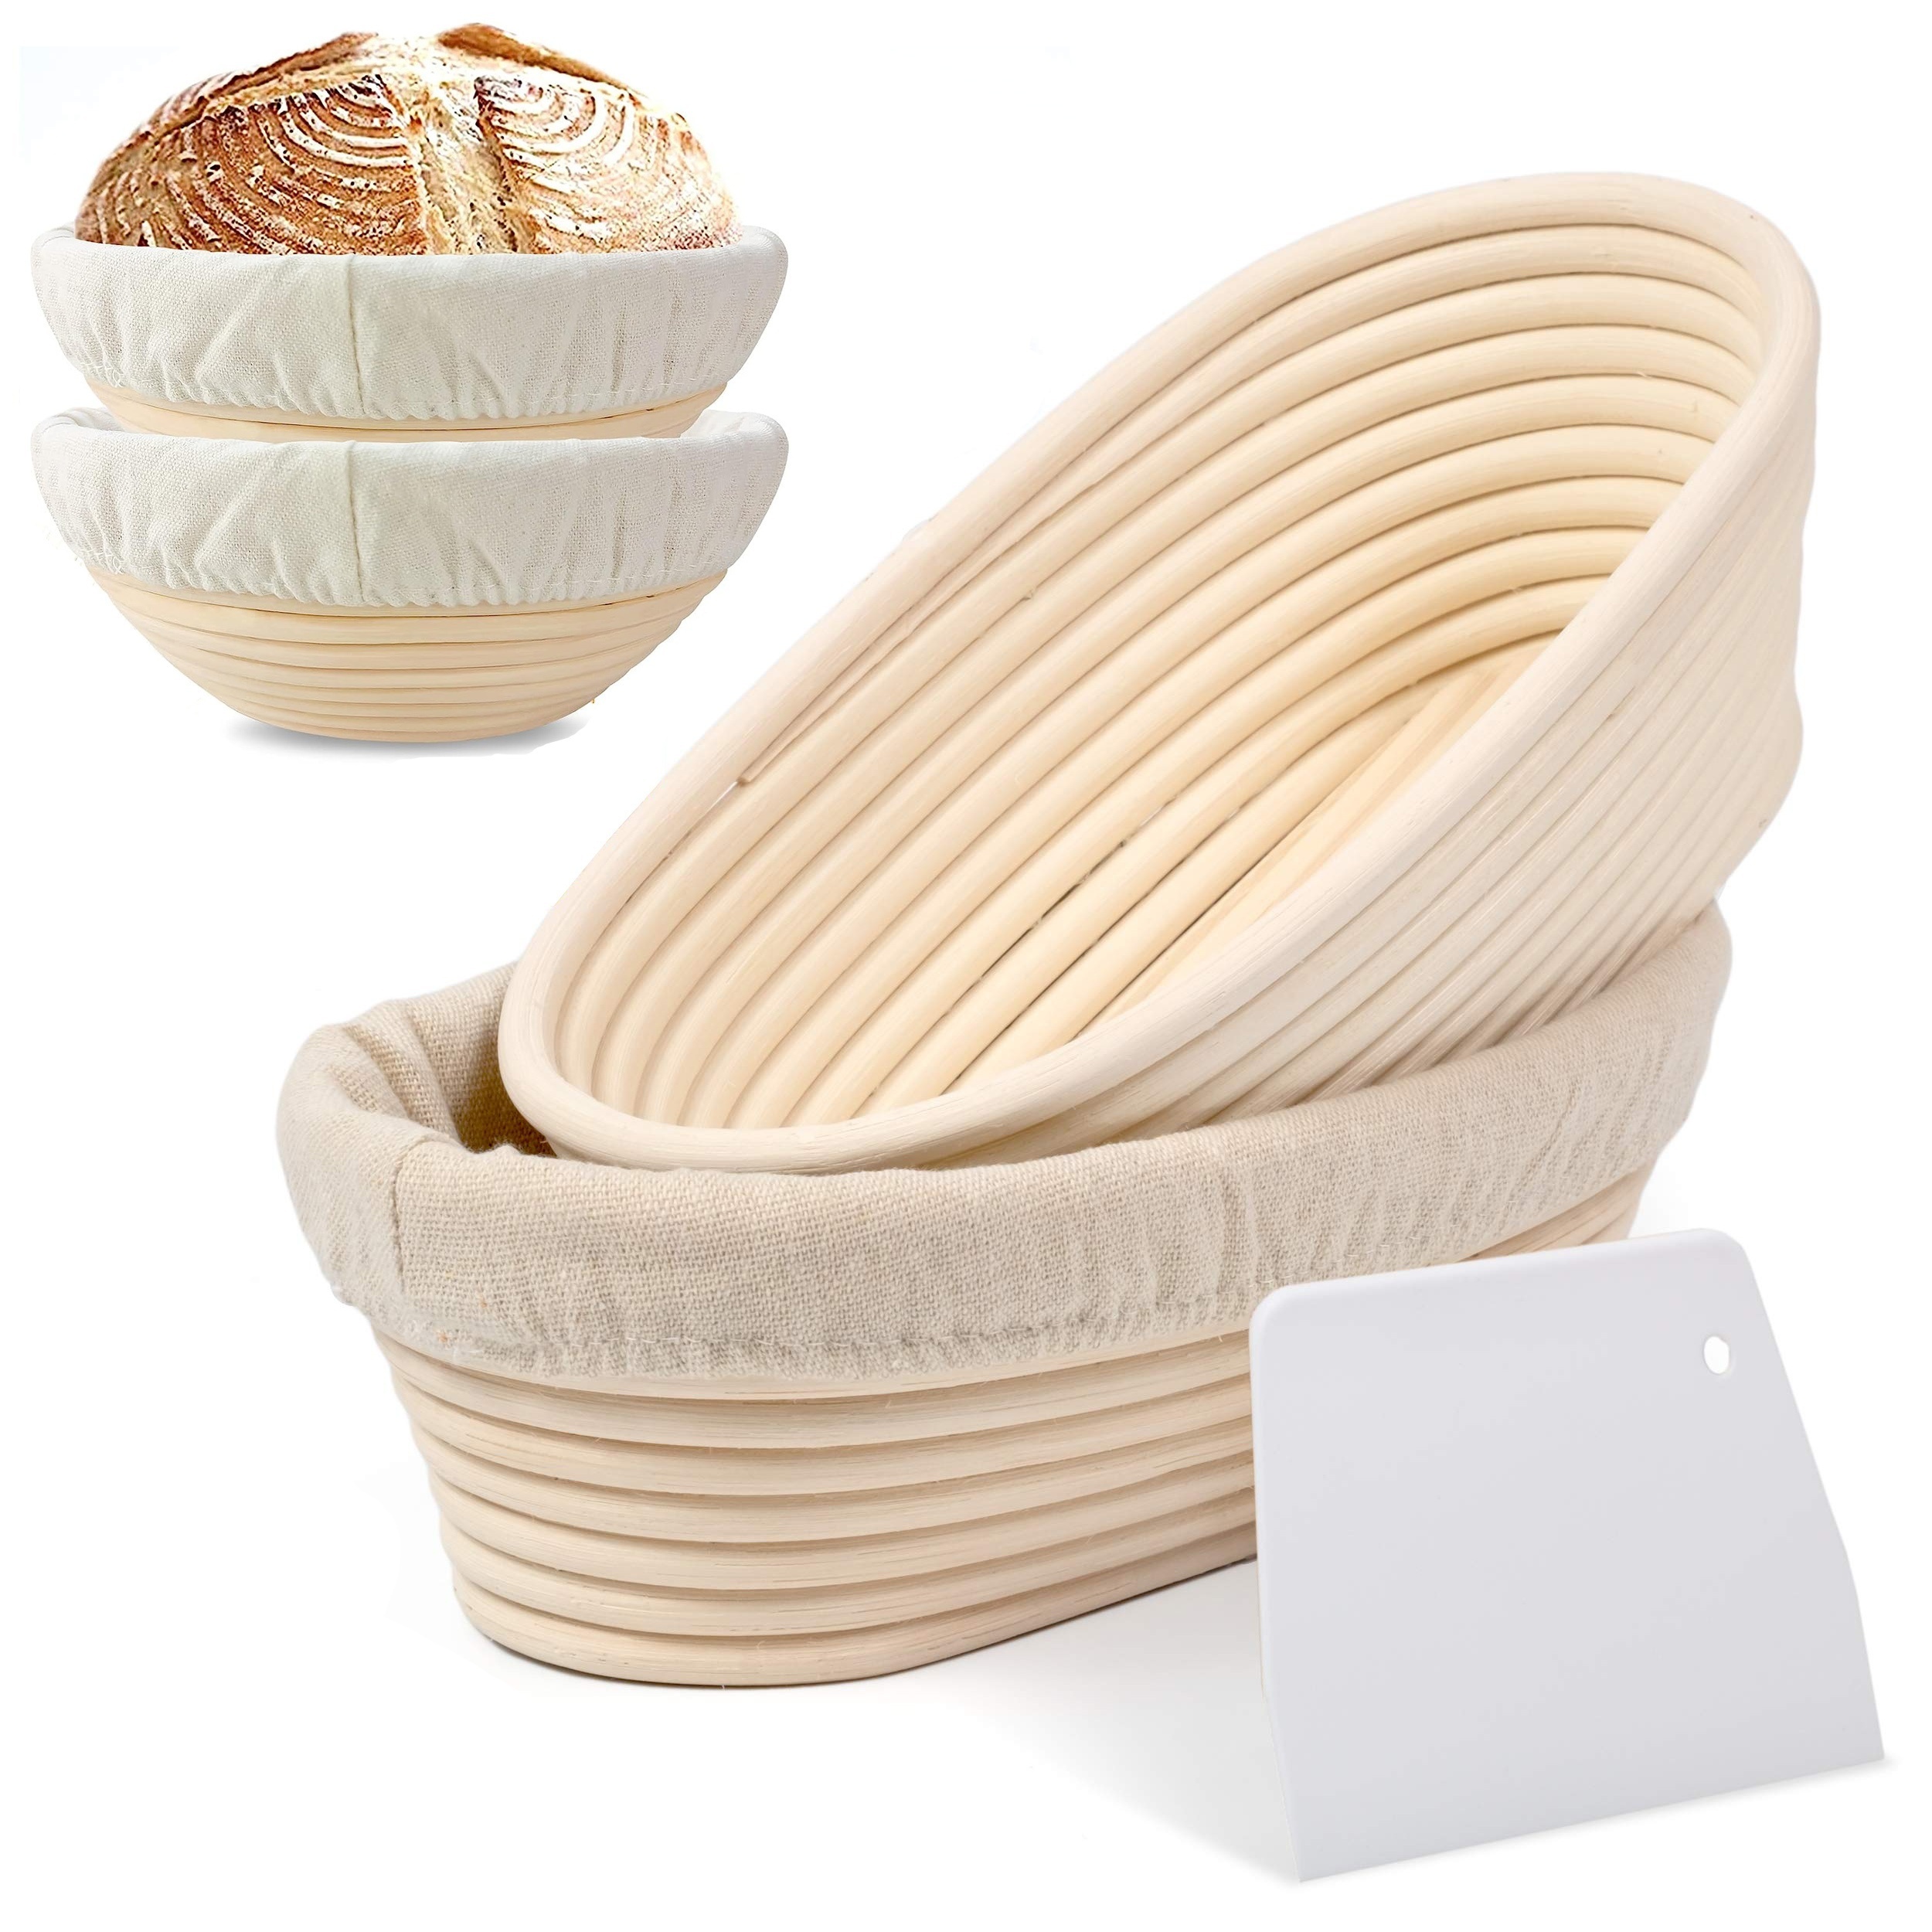 Set of 2 Bread Proofing Basket